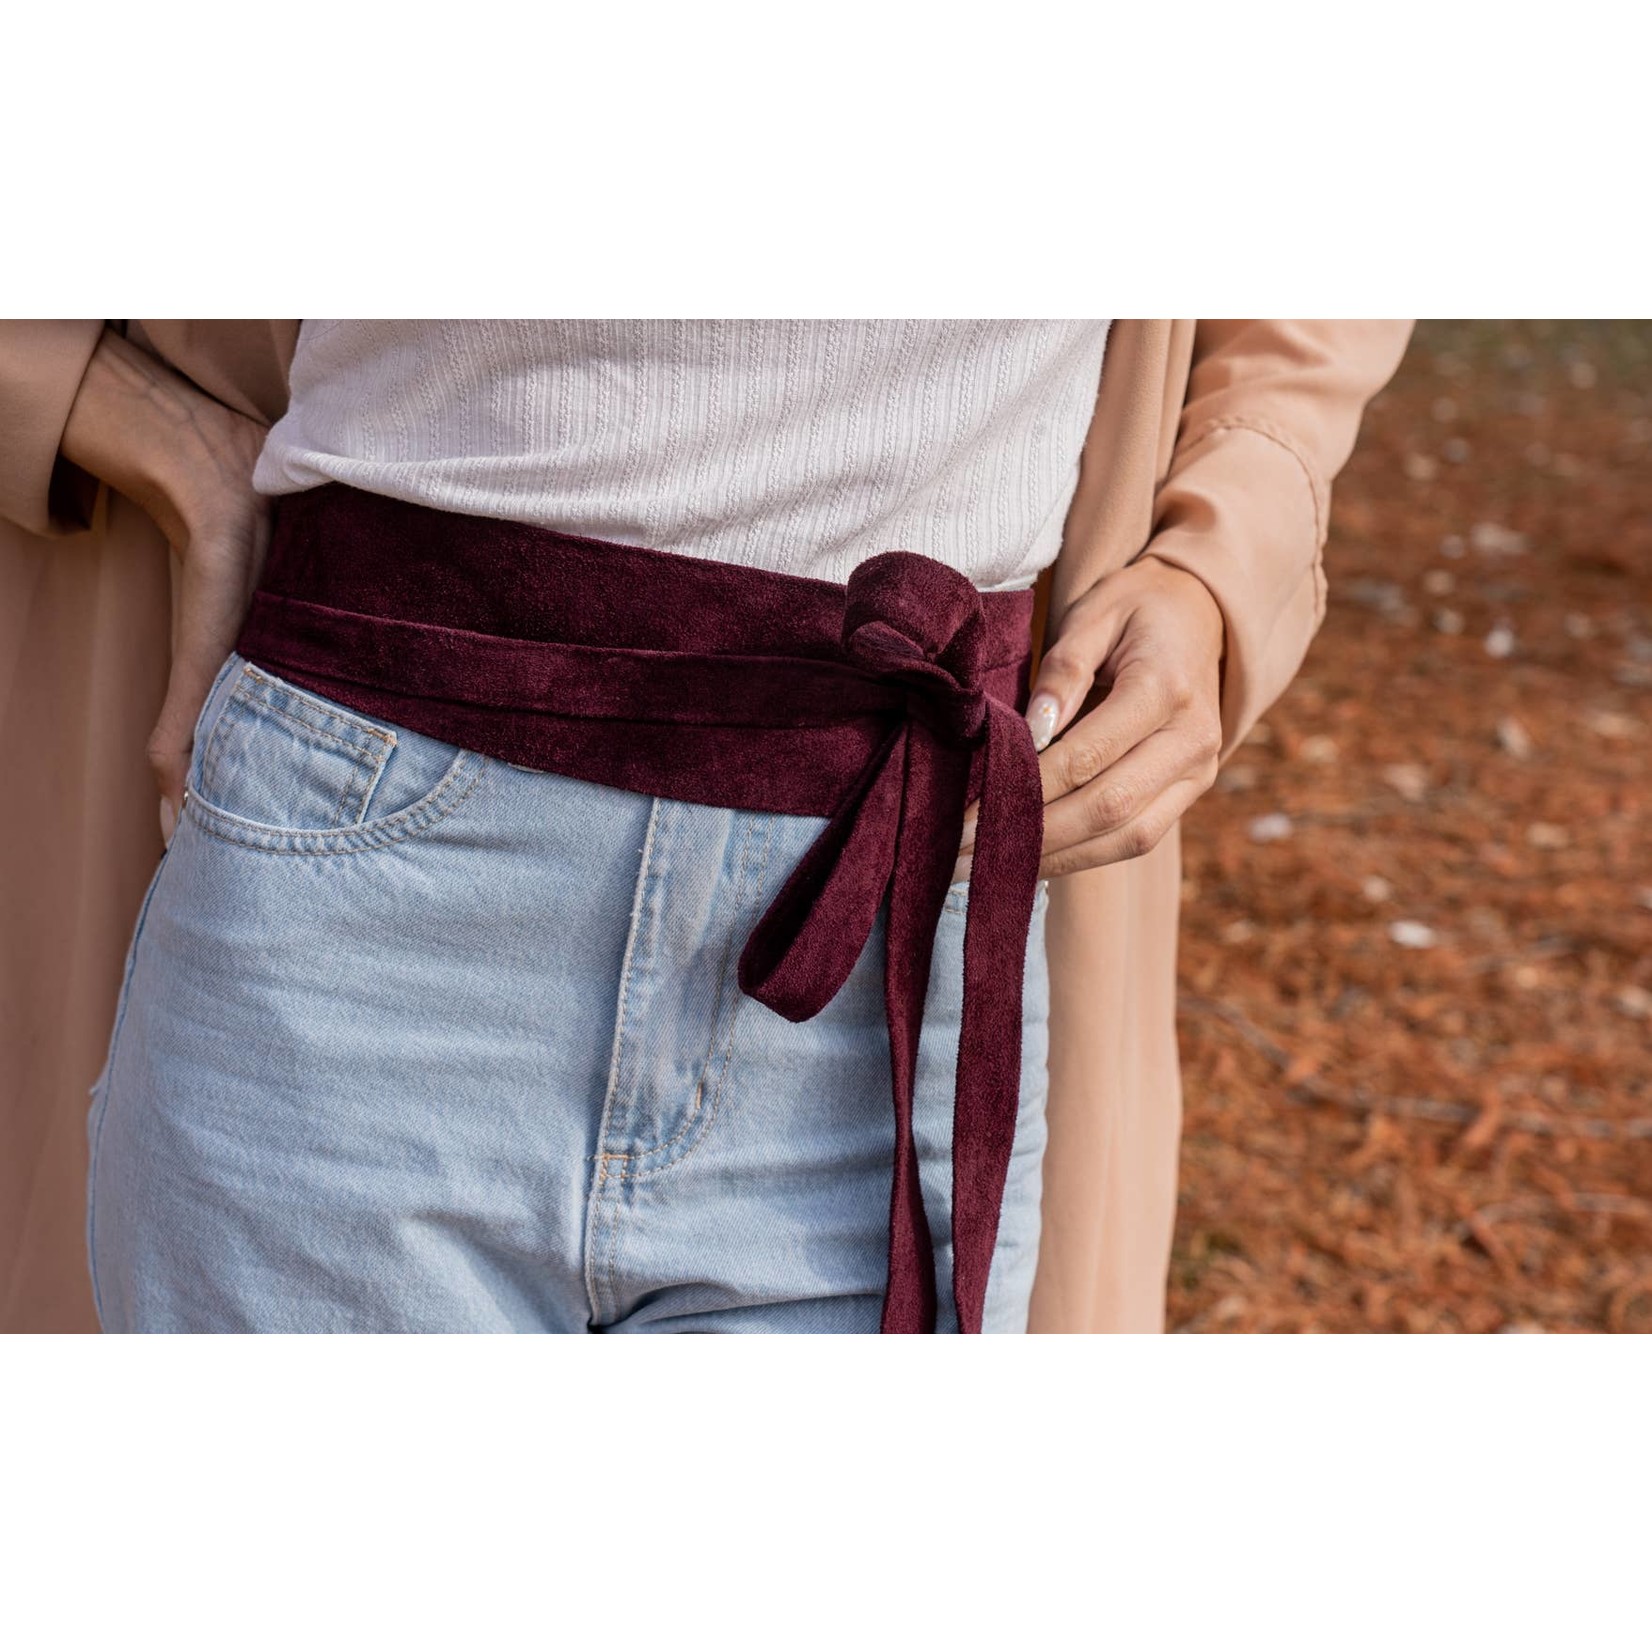 ADA Original Velour Suede Leather Wrap Belt in Berry